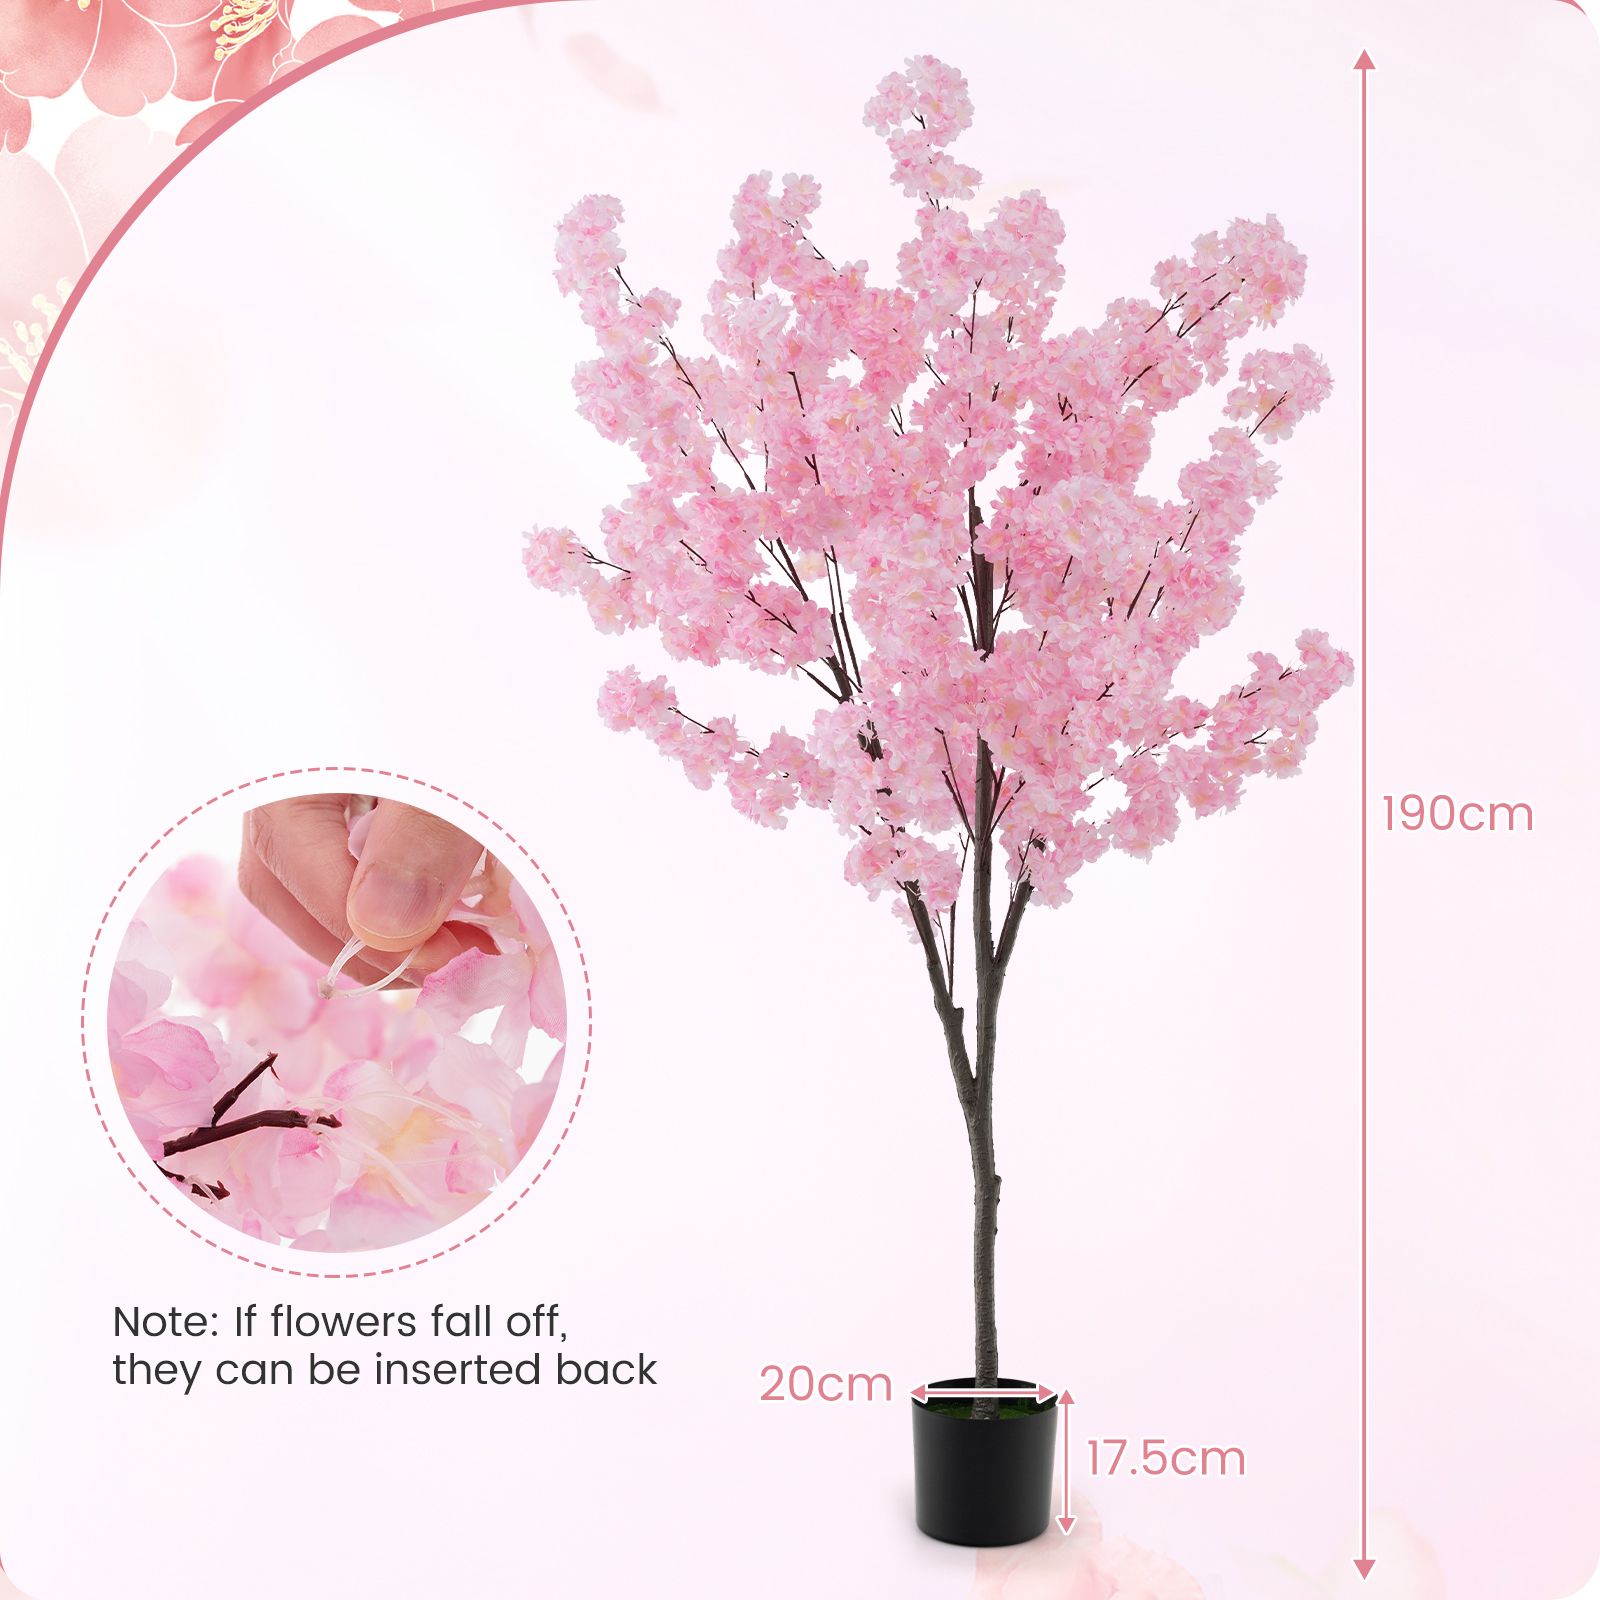 190cm Tall Artificial Cherry Blossom Tree